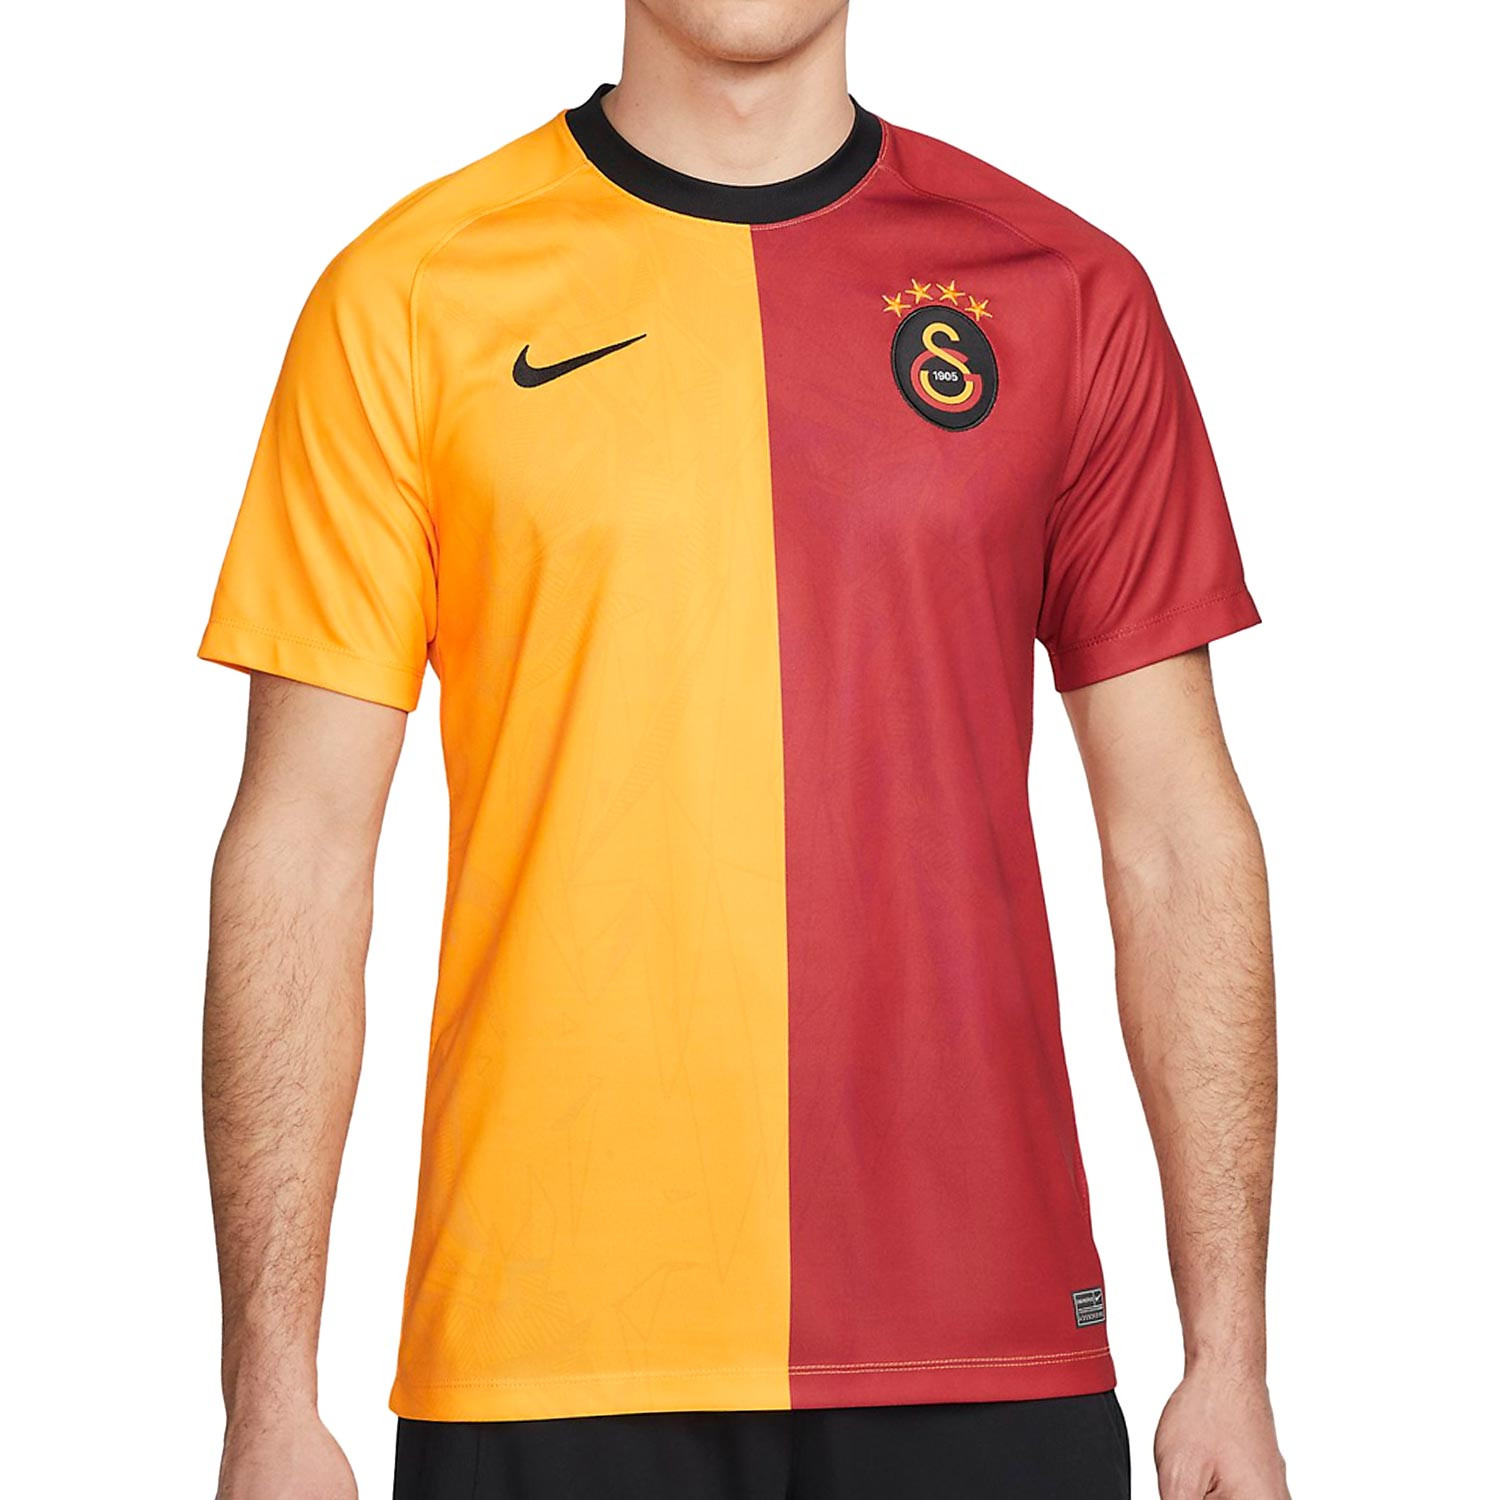 Camiseta Nike 2023 Dri-Fit naranja rojo futbolmania